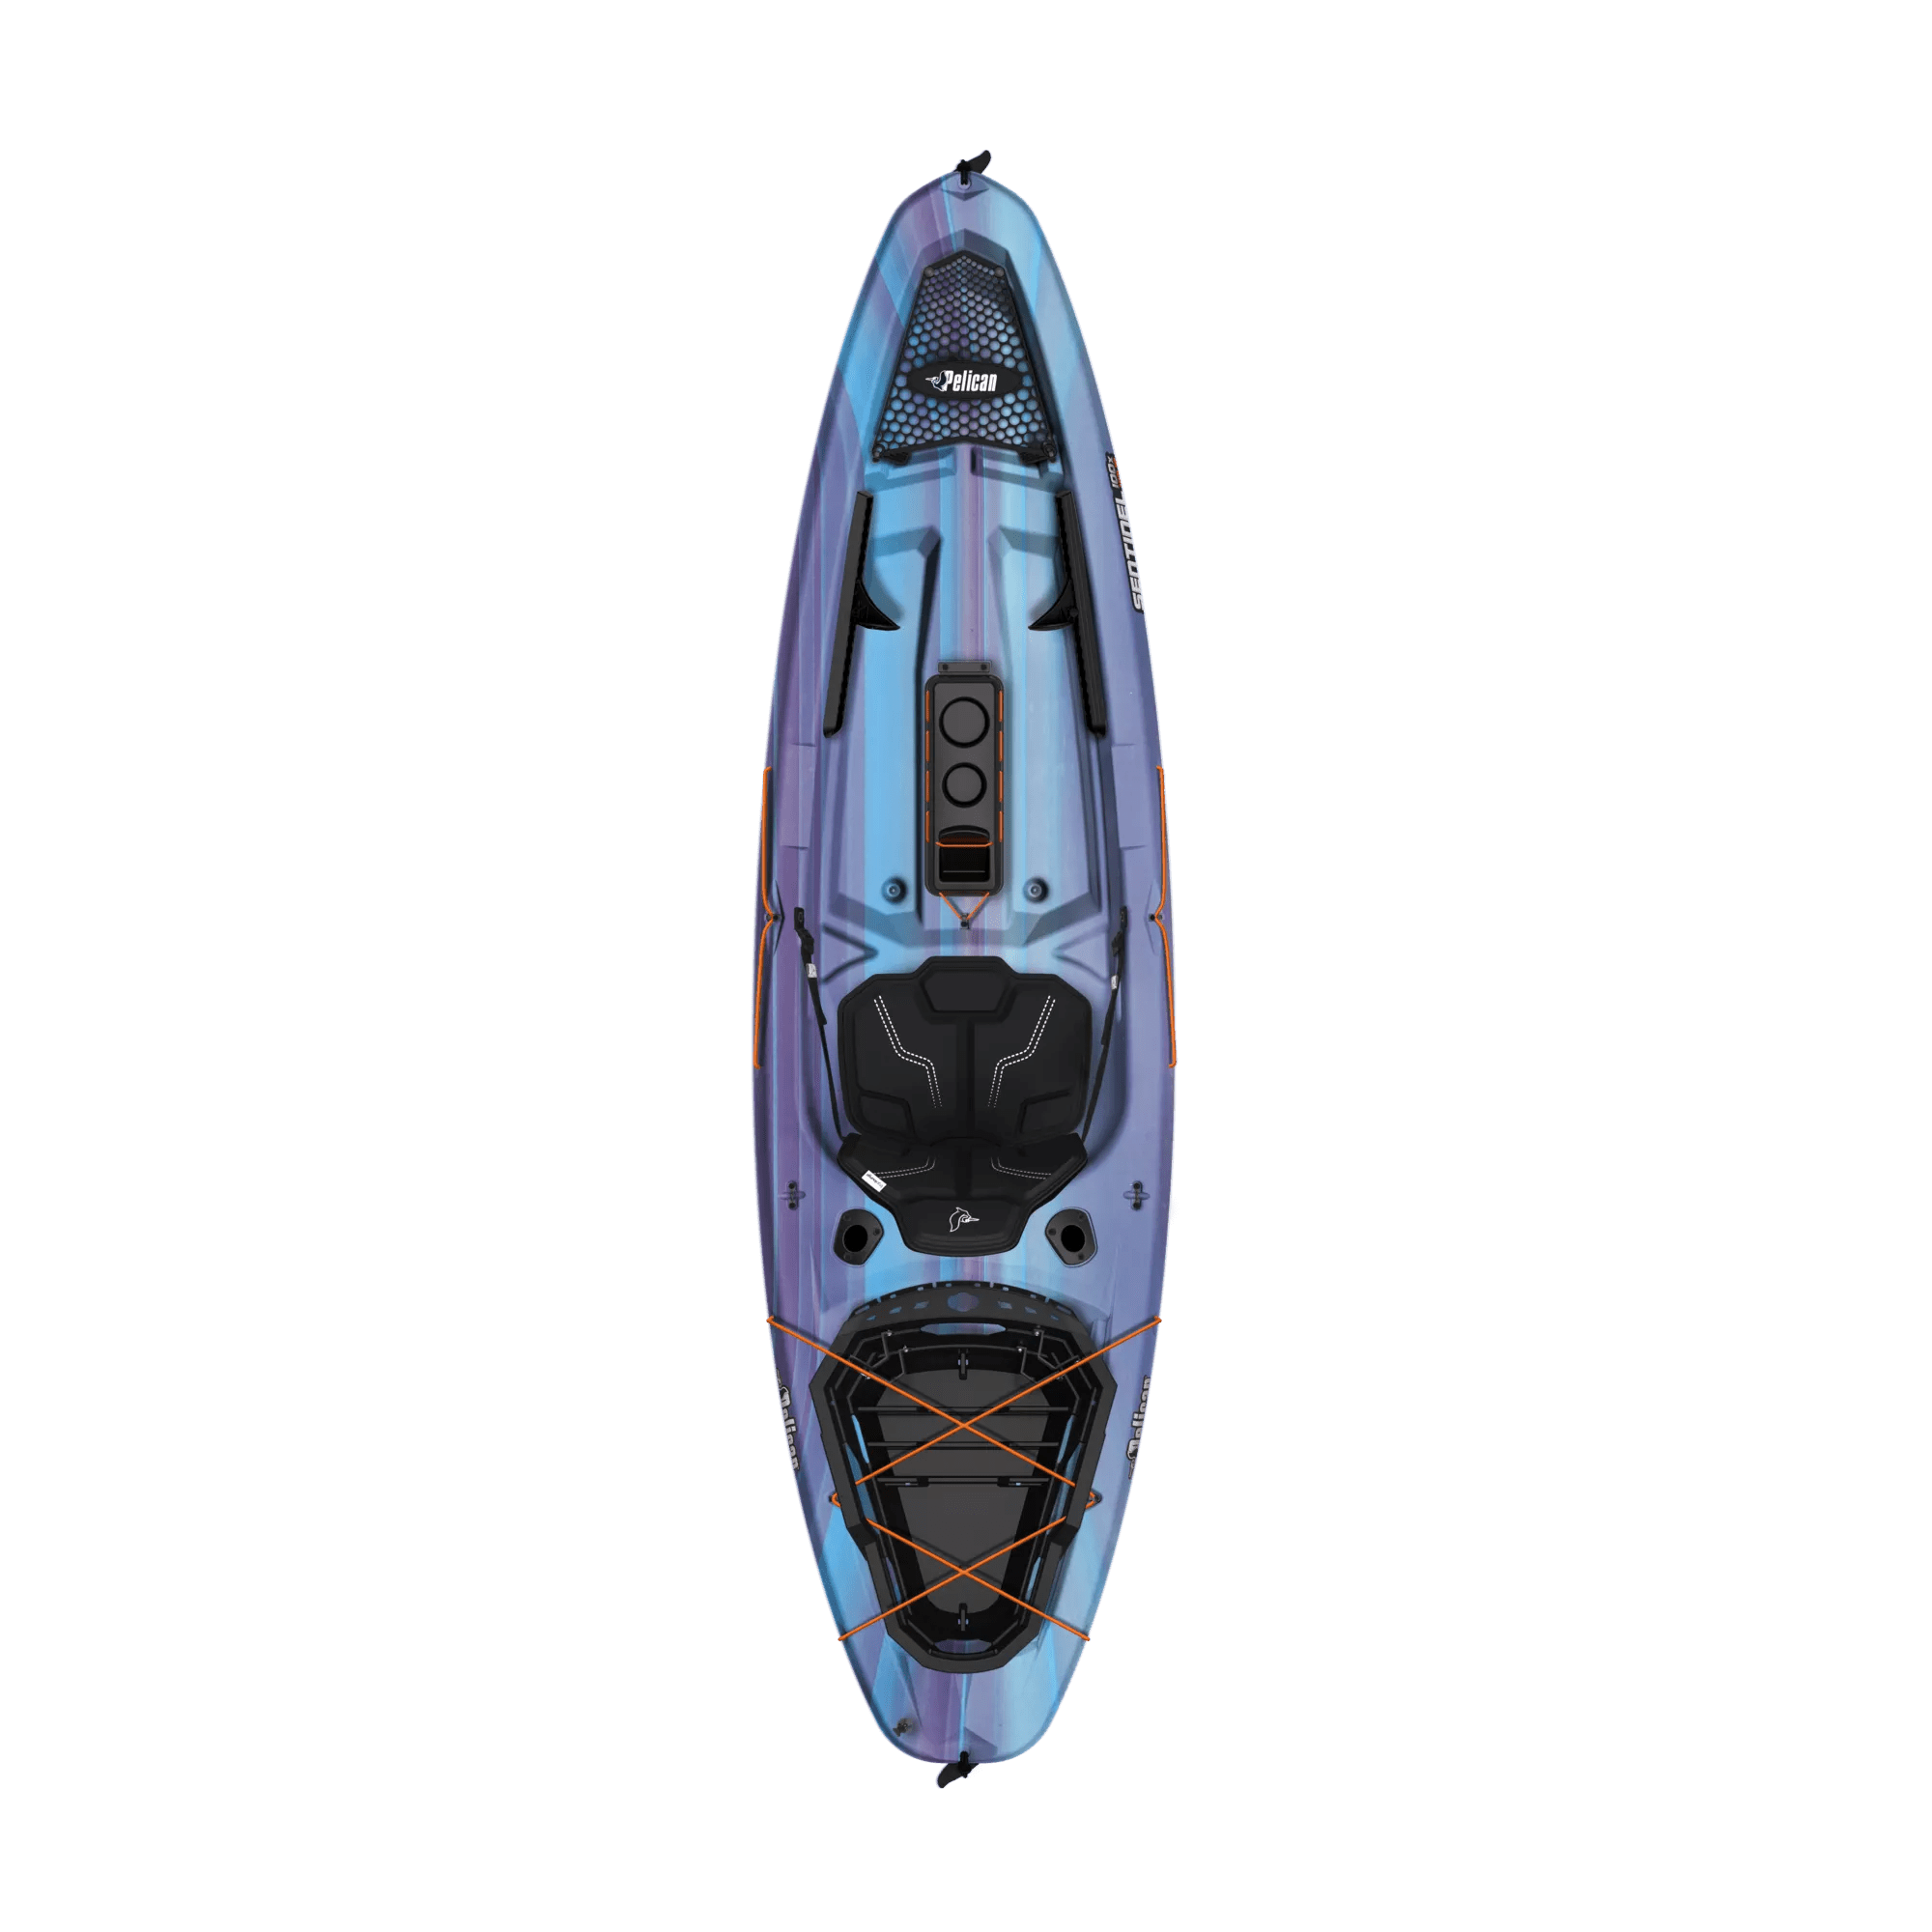 PELICAN - Sentinel 100X Angler Fishing Kayak - Blue - MBF10P103-00 - TOP